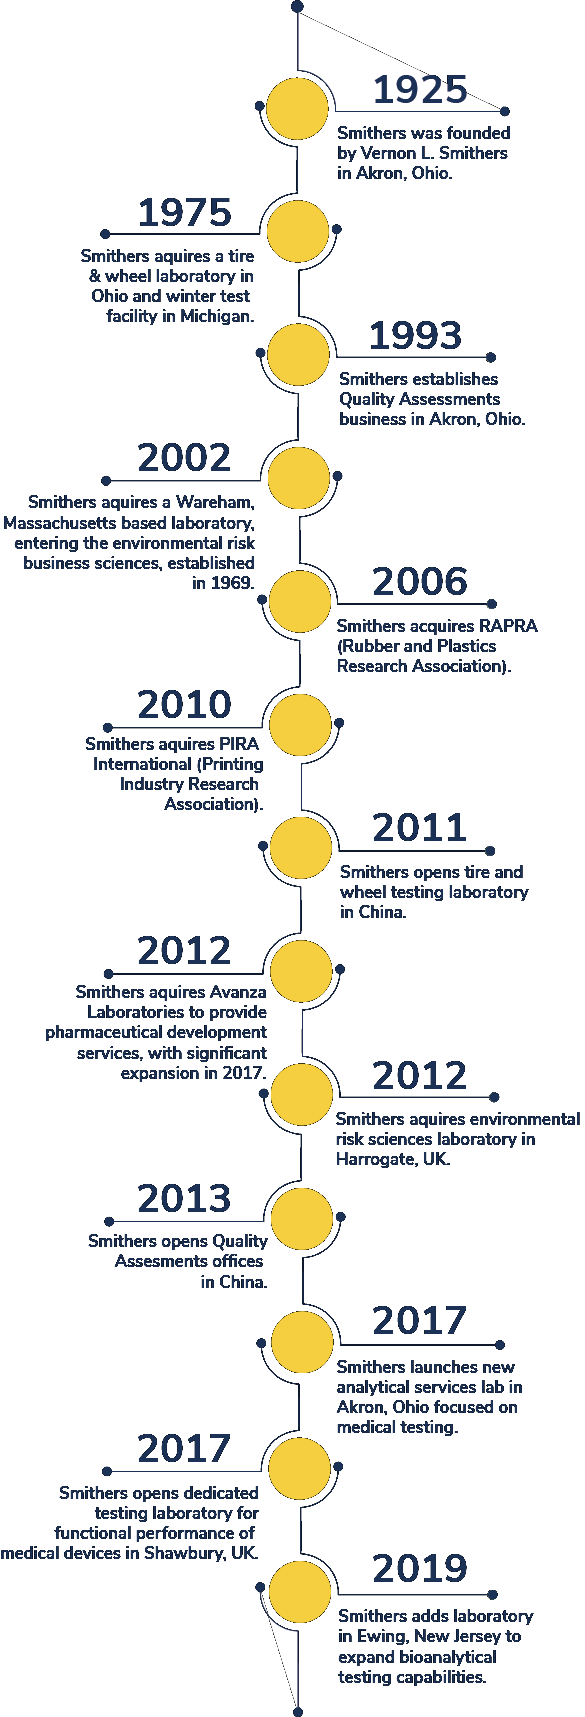 A timeline of Smithers' organizational history